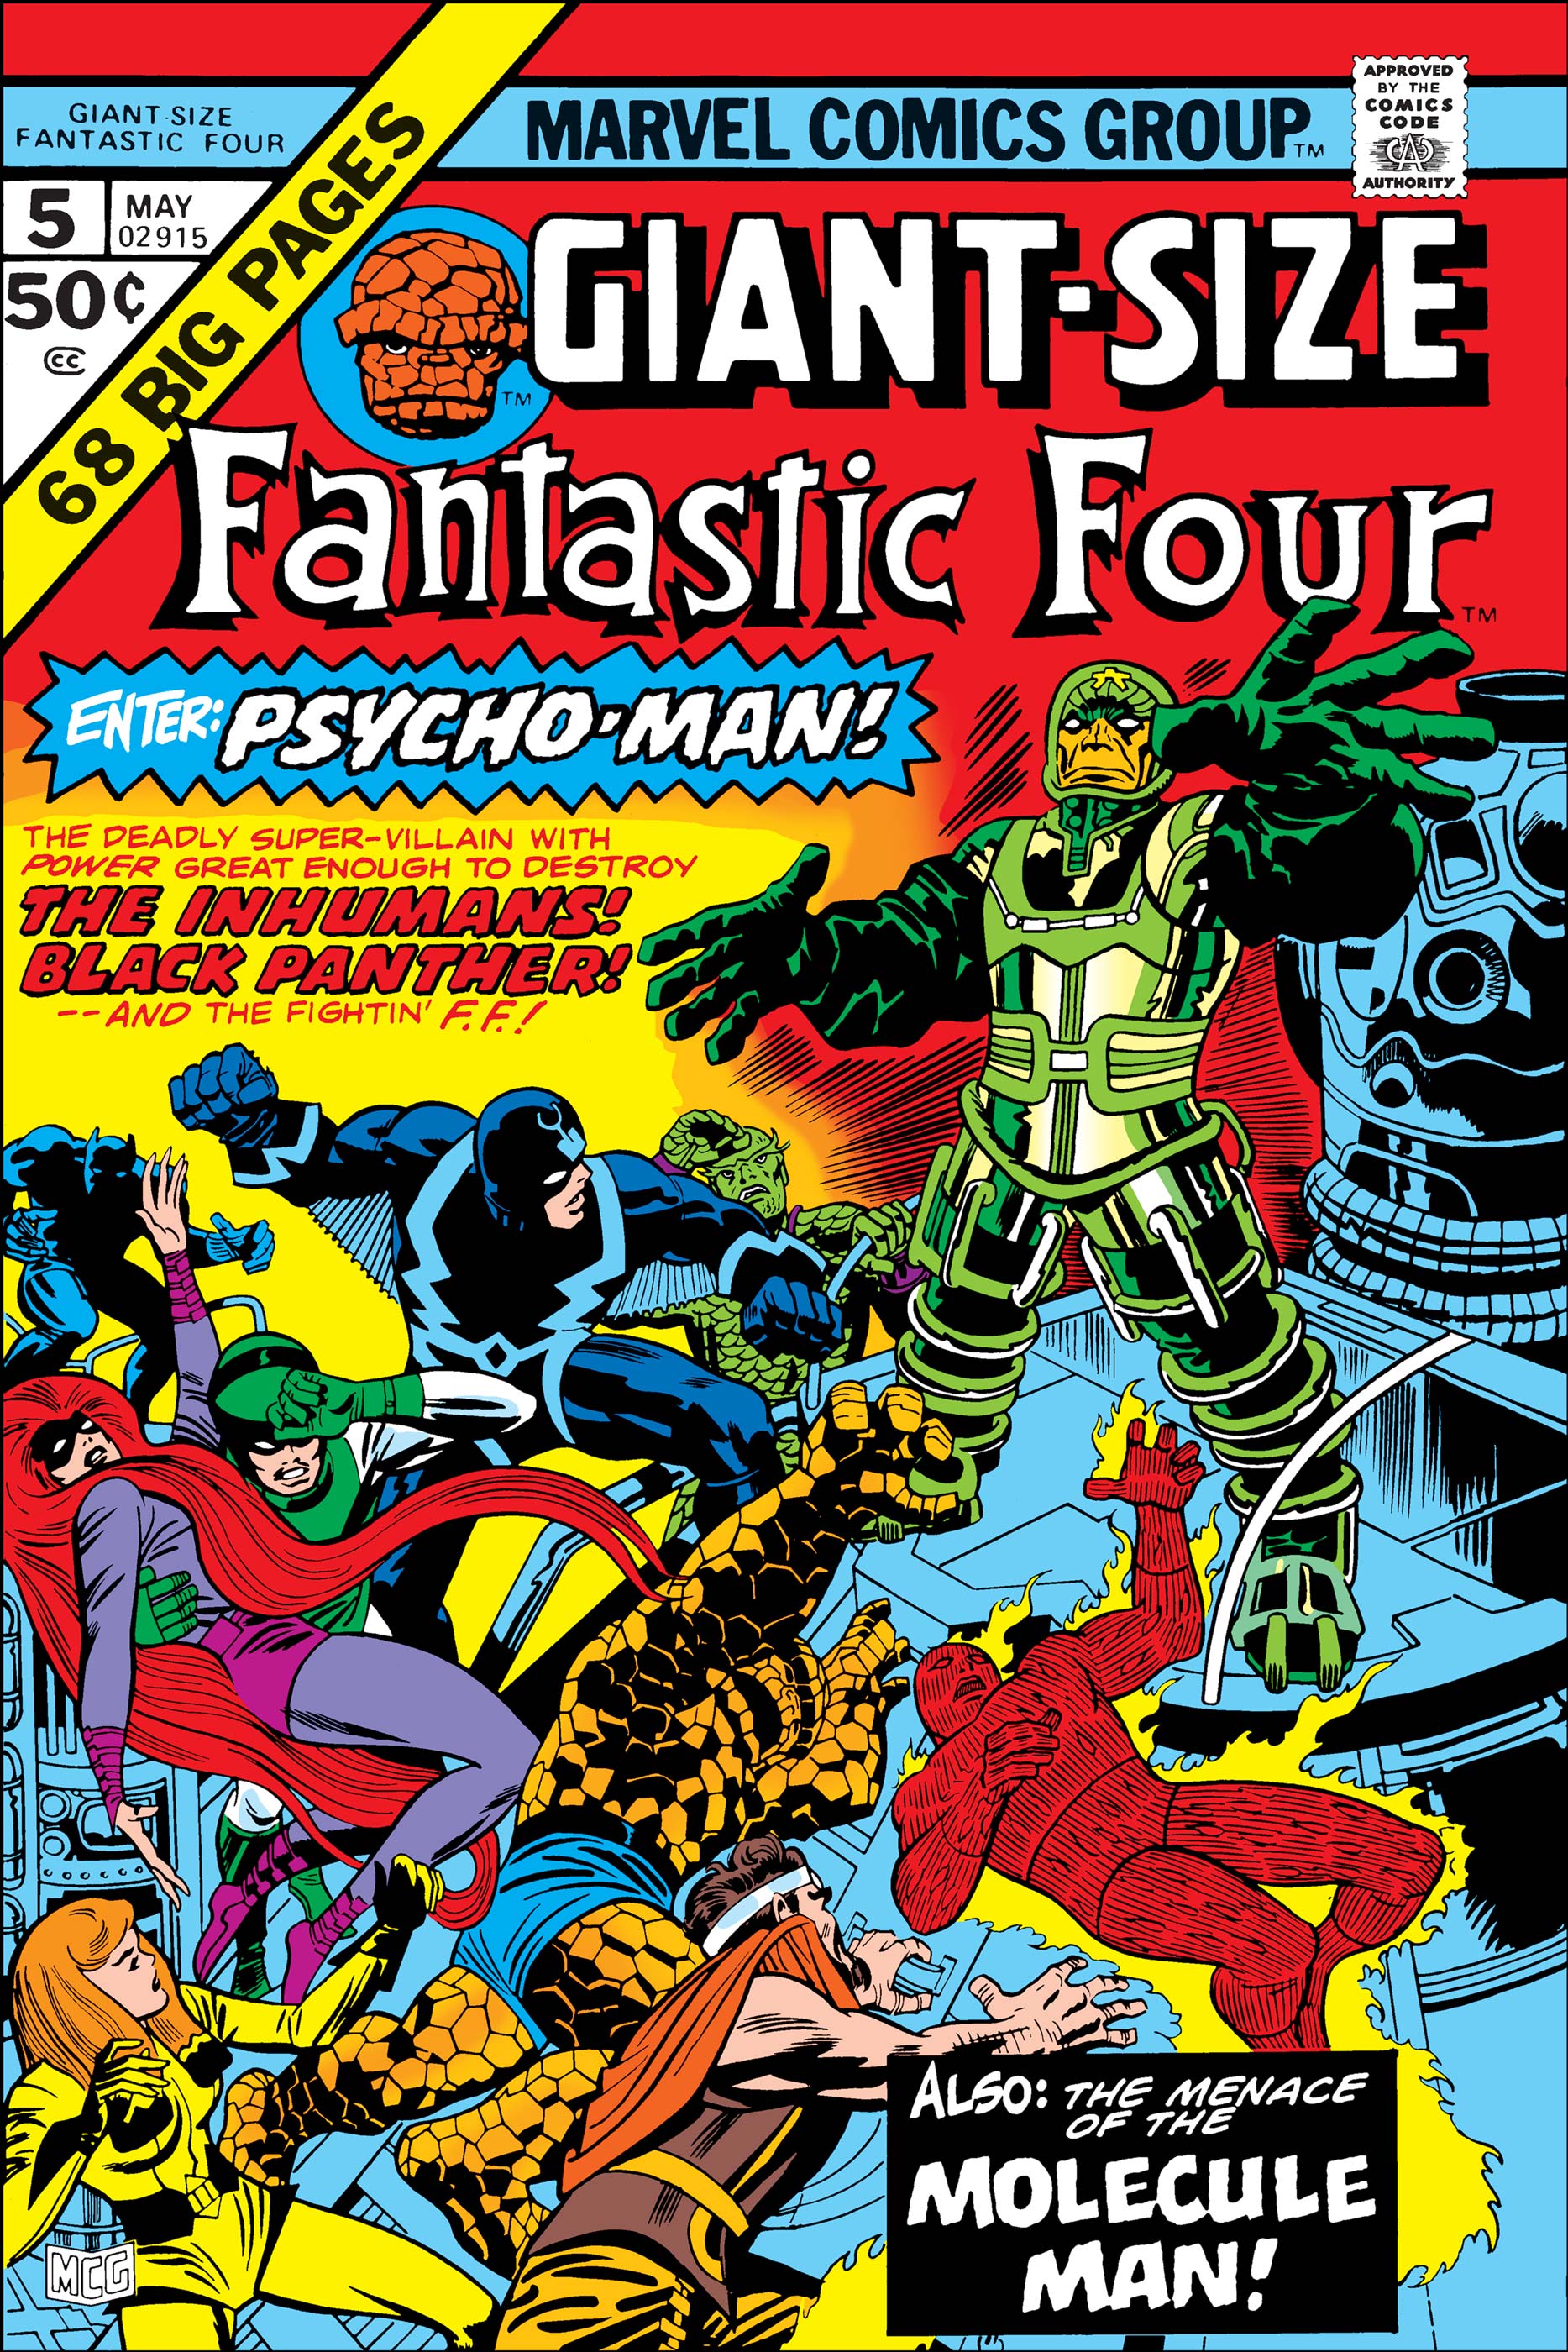 Giant-Size Fantastic Four (1974) #5